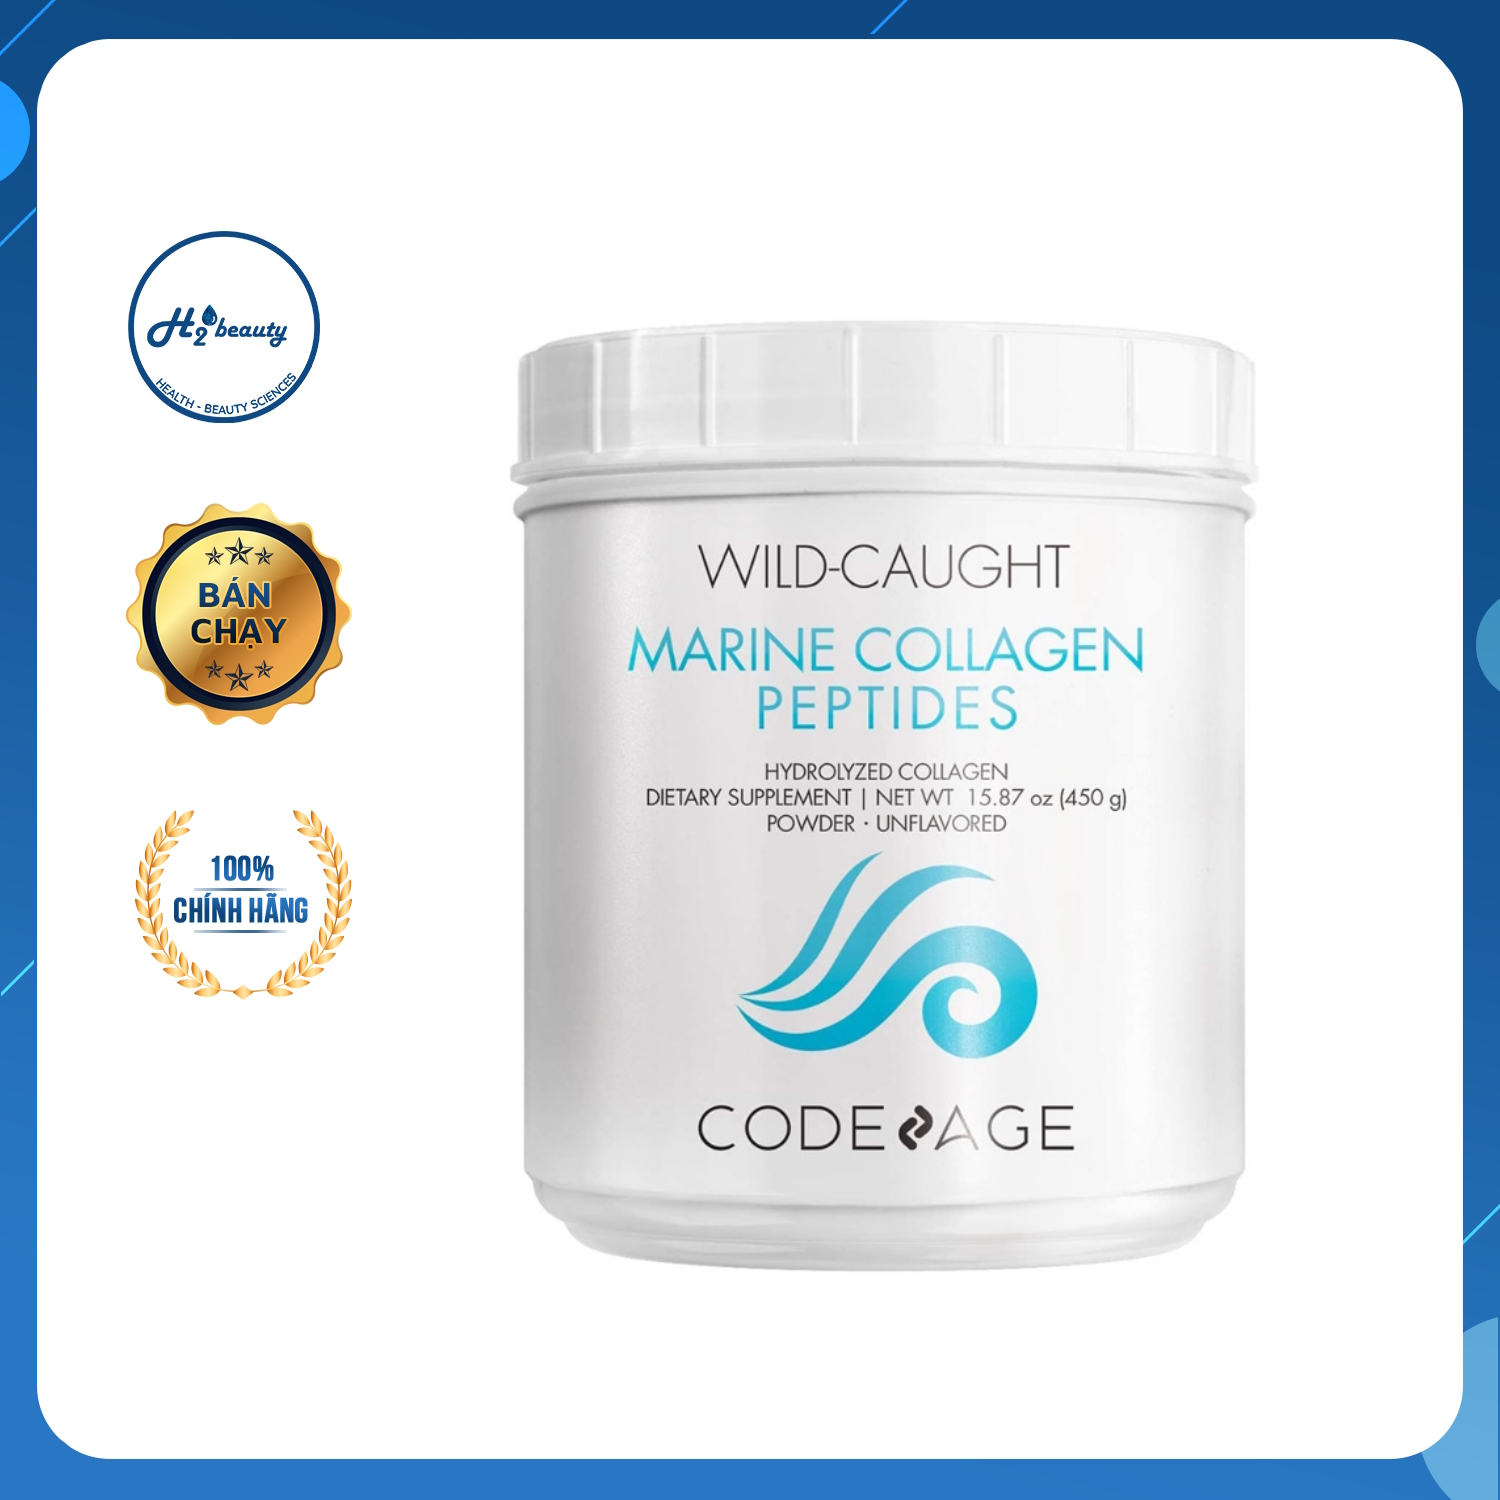 Bột Uống Wild-caught Marine Collagen Peptides